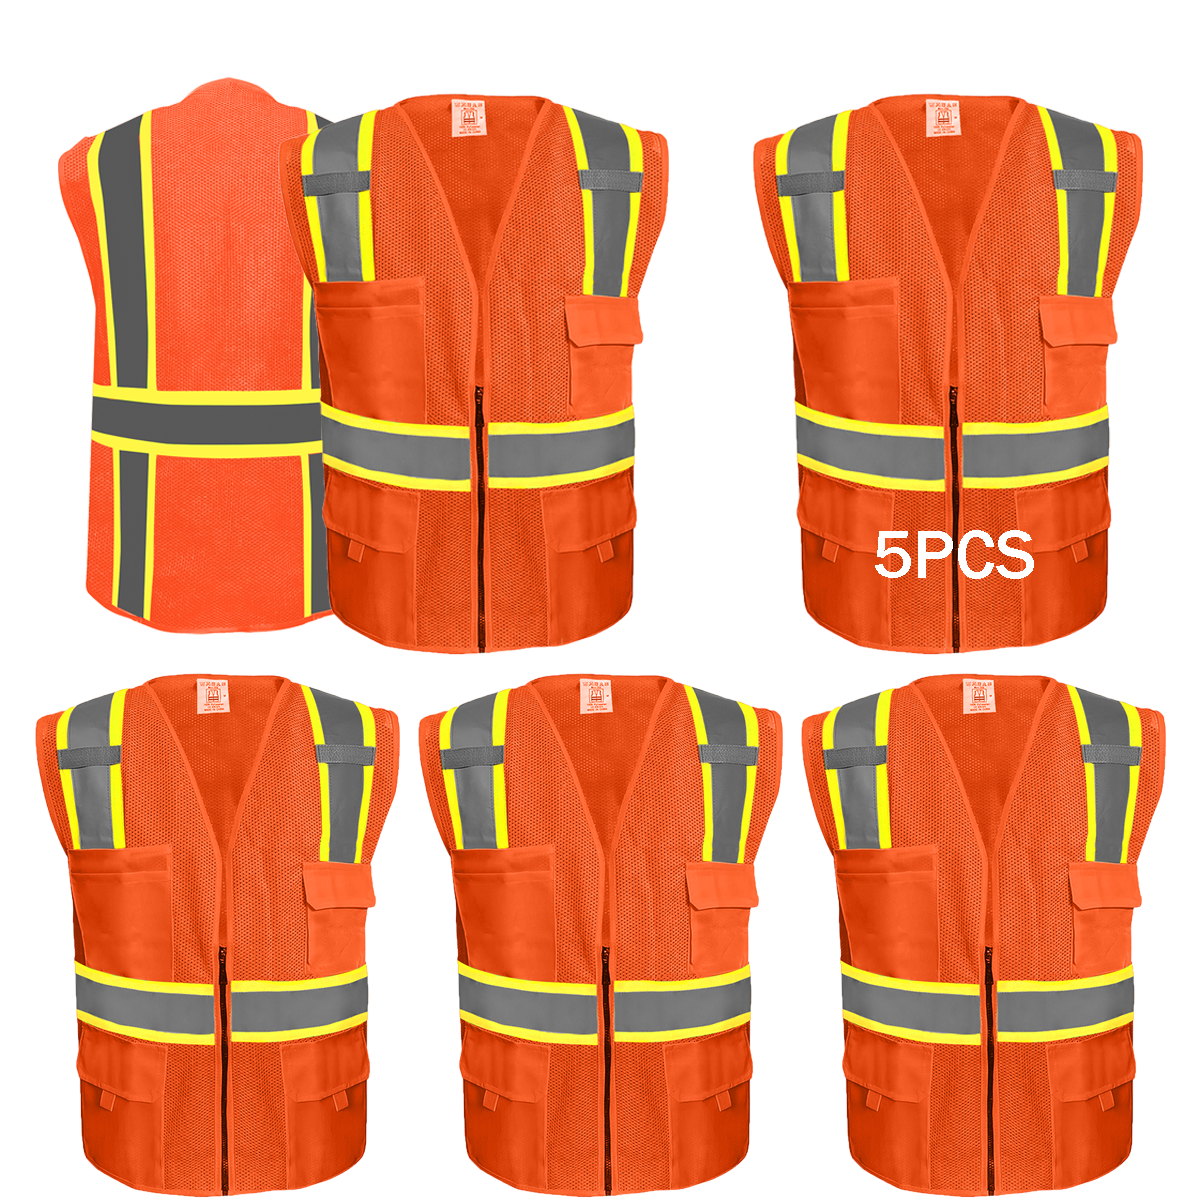 5pcs orange vest